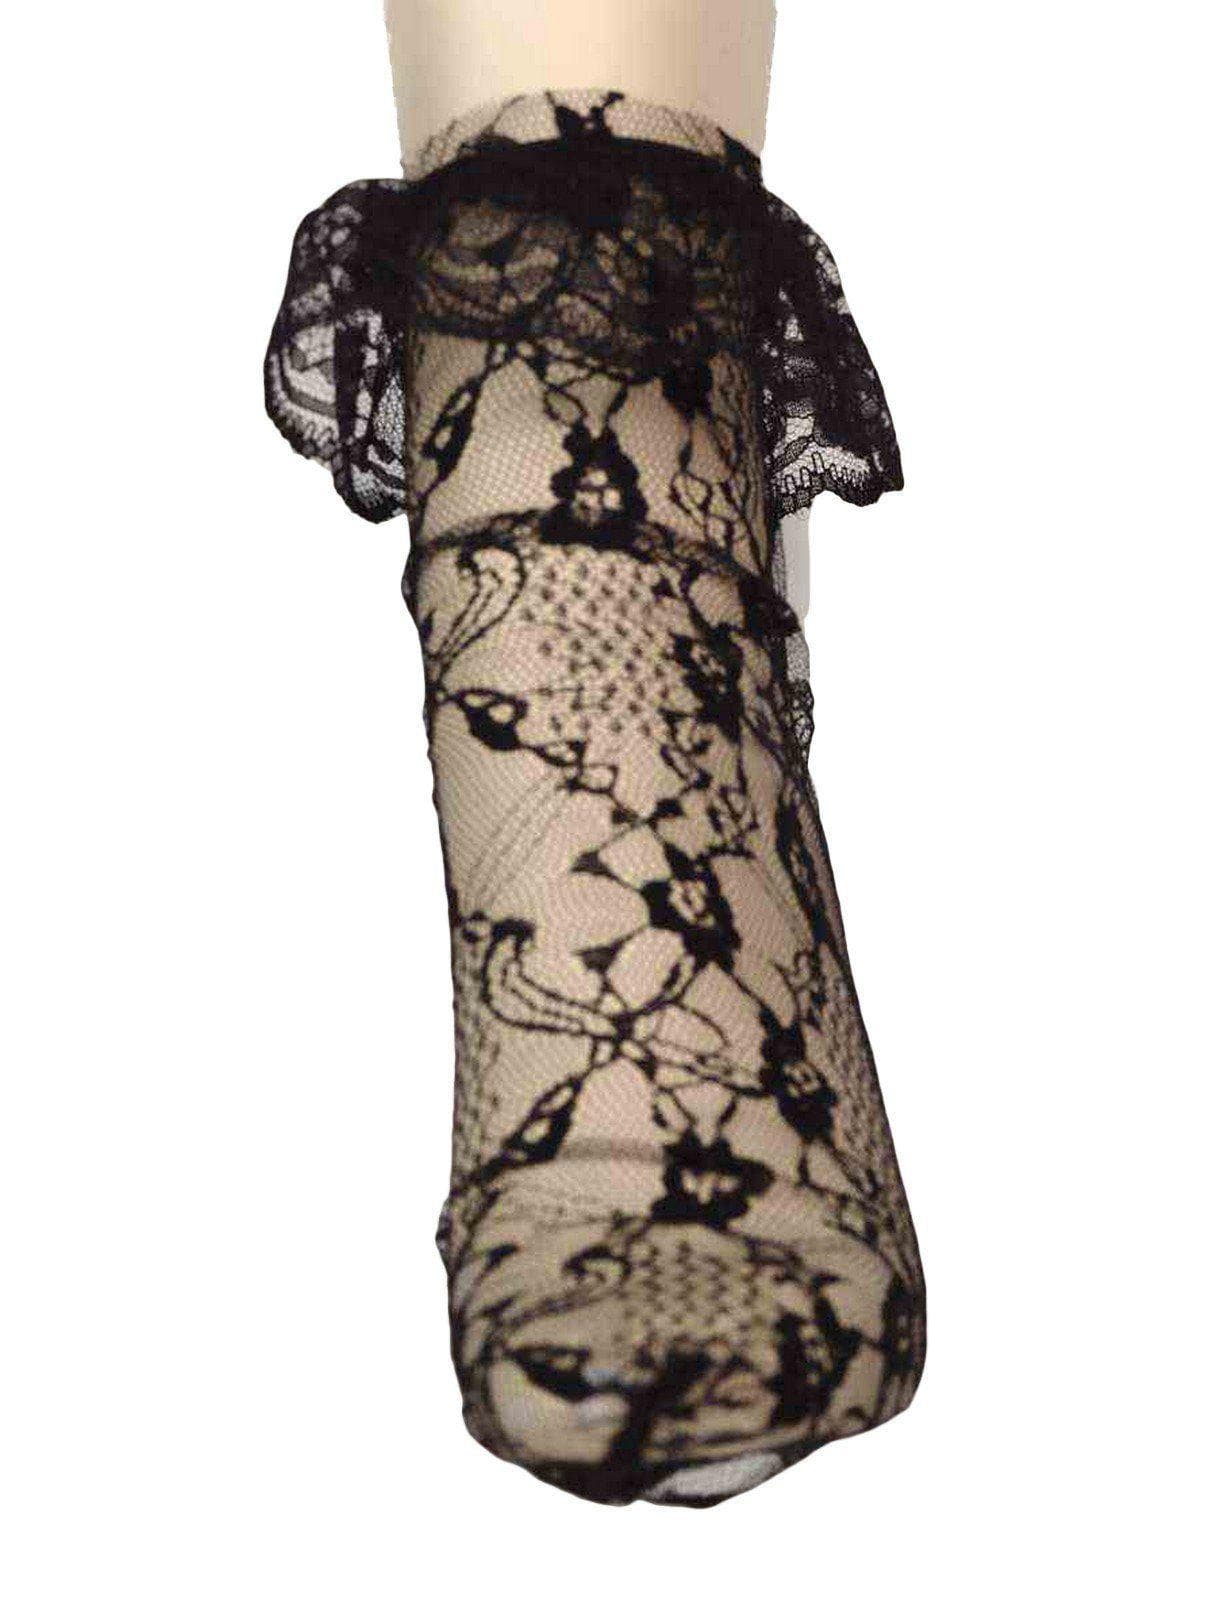 Black Lace Ankle Socks - costumes.com